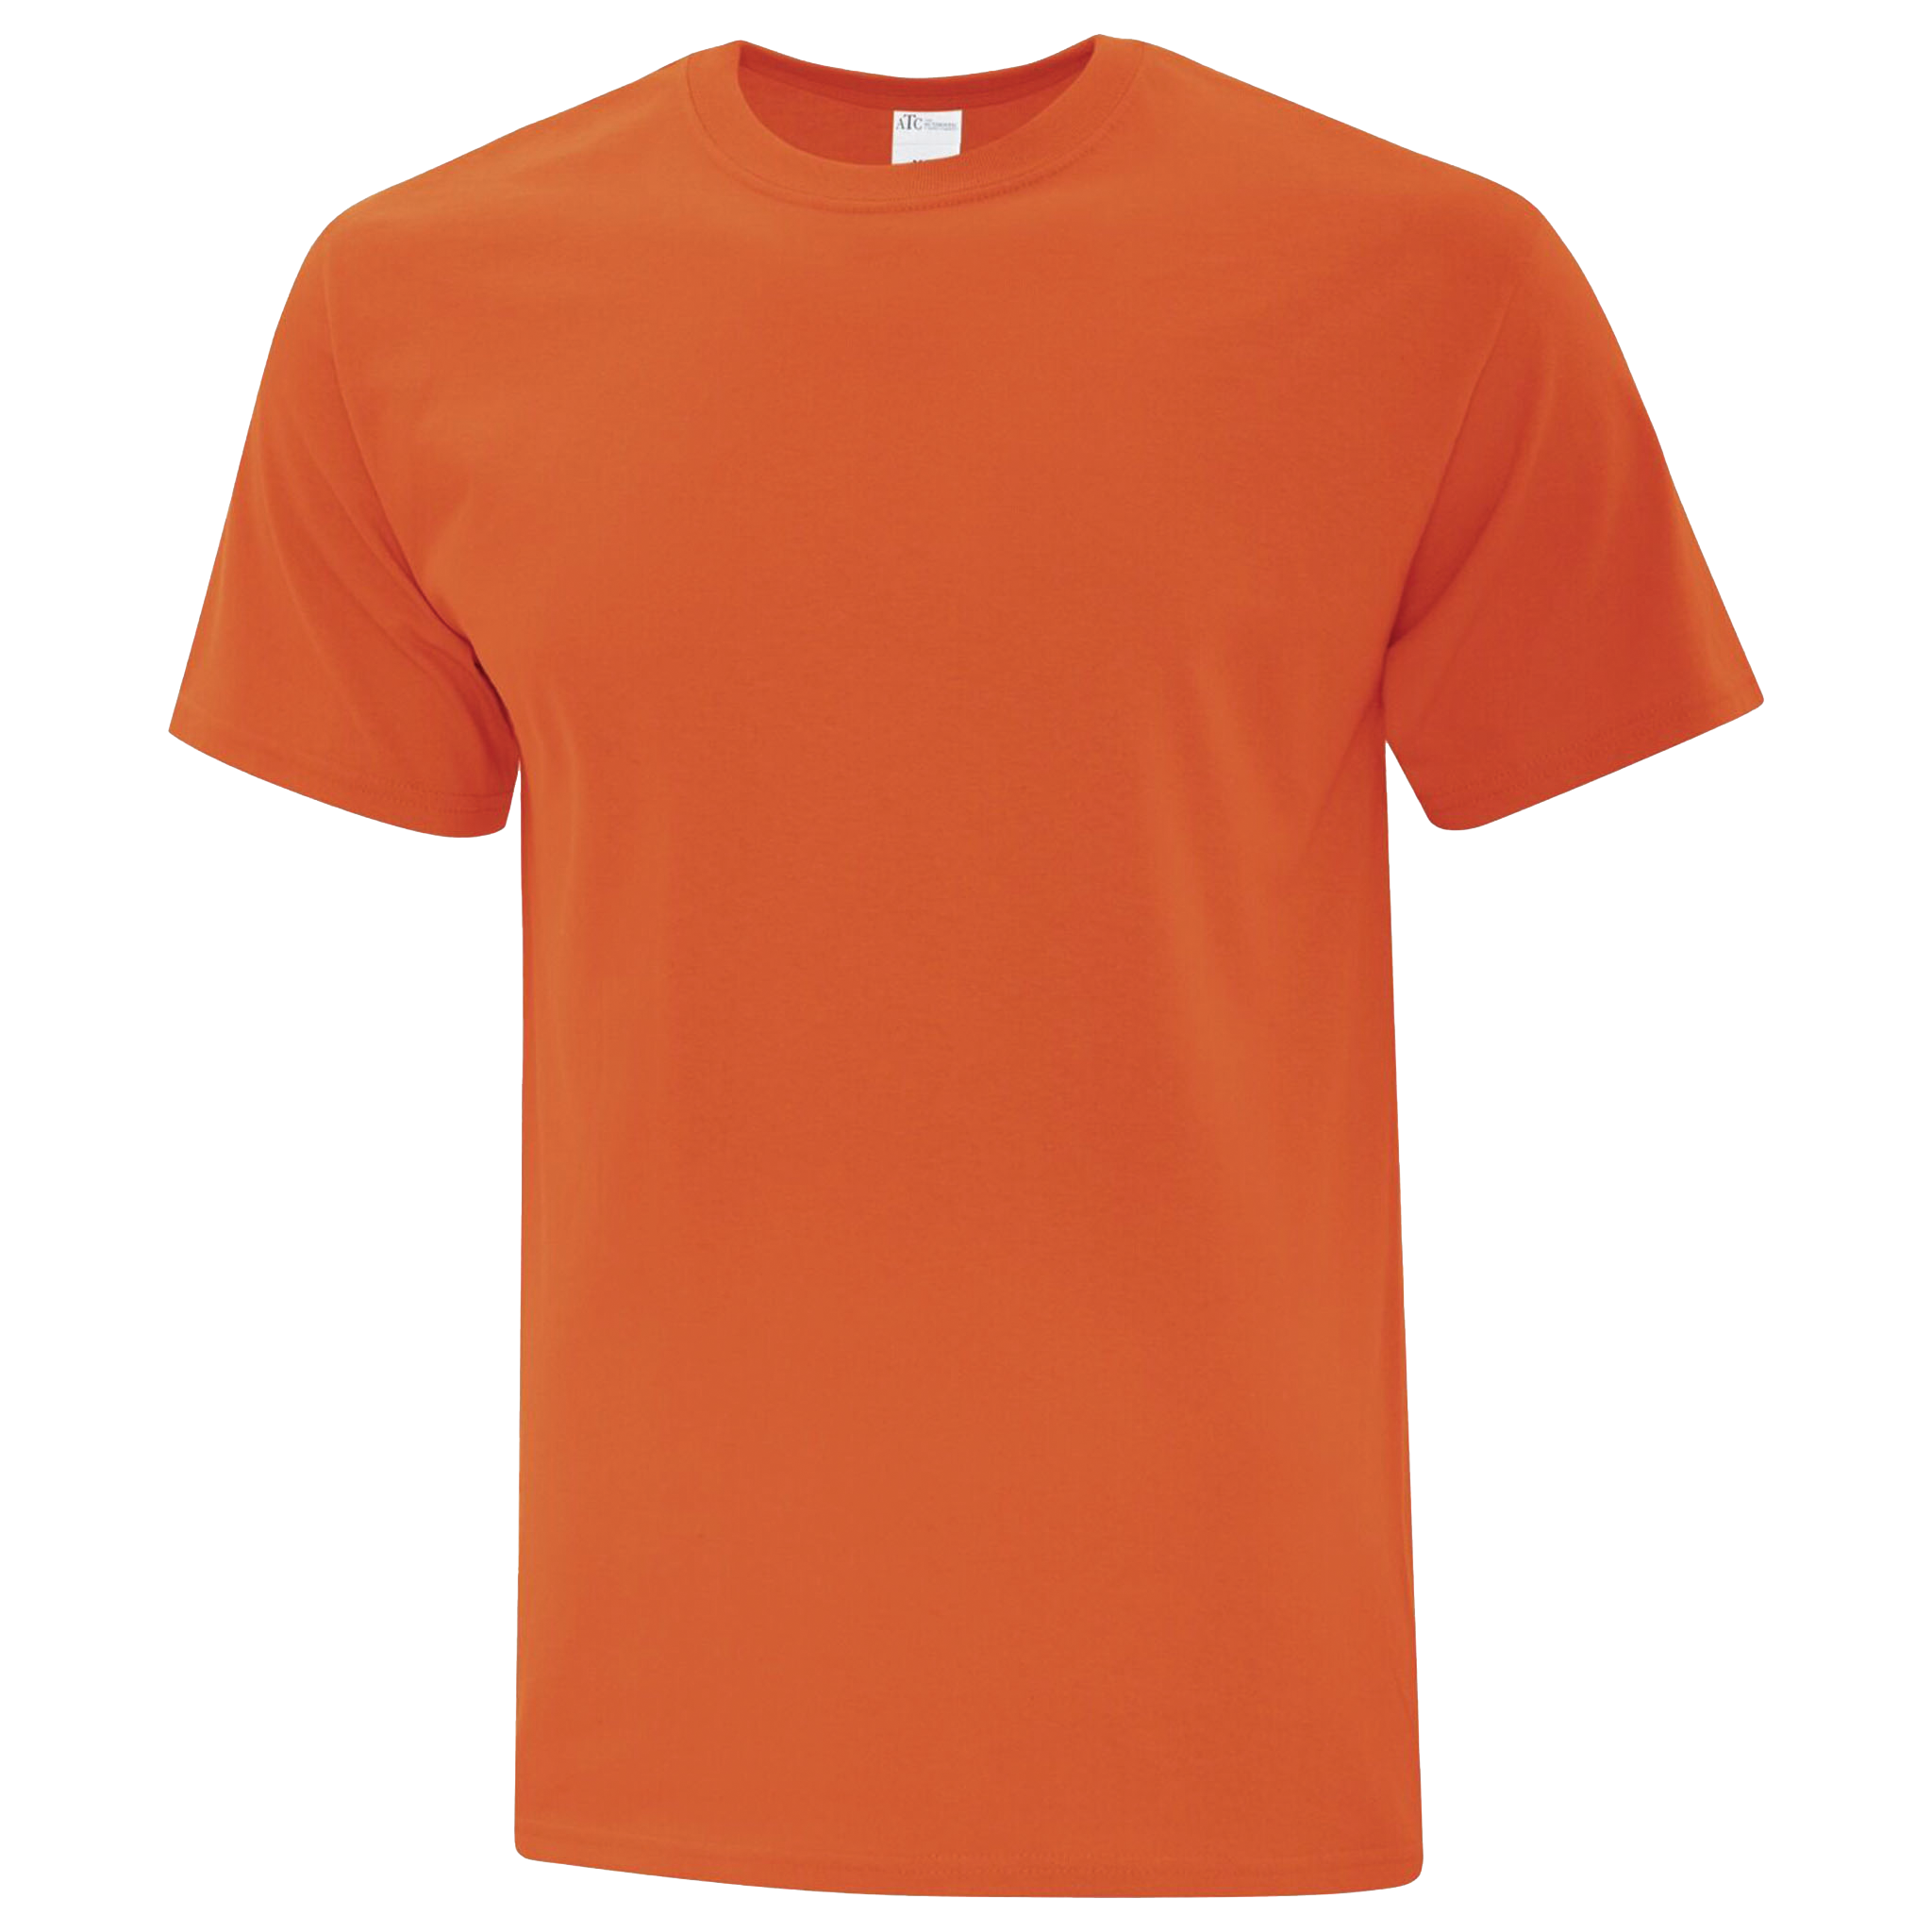 ATC Everyday Cotton T-Shirt - Men's Sizing S-4XL - Orange